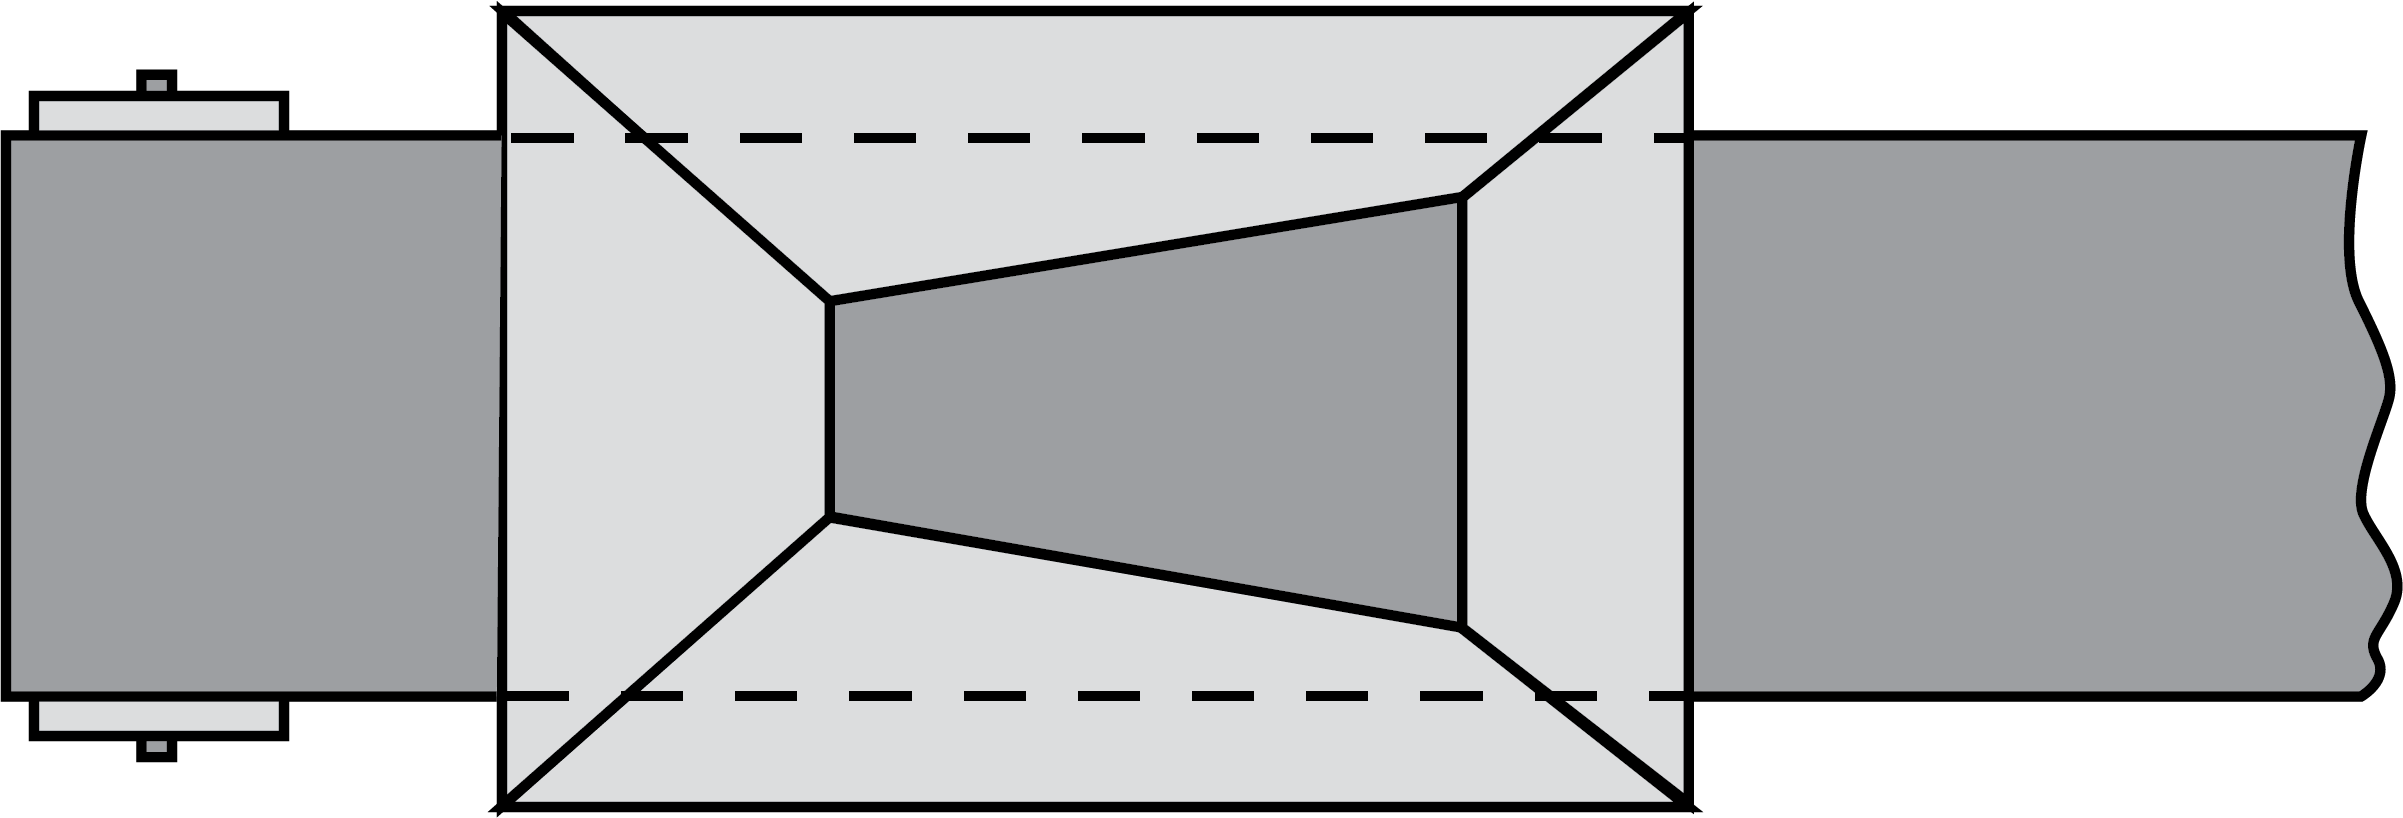 Illustration of belt conveyor skirtboard in the load zone.